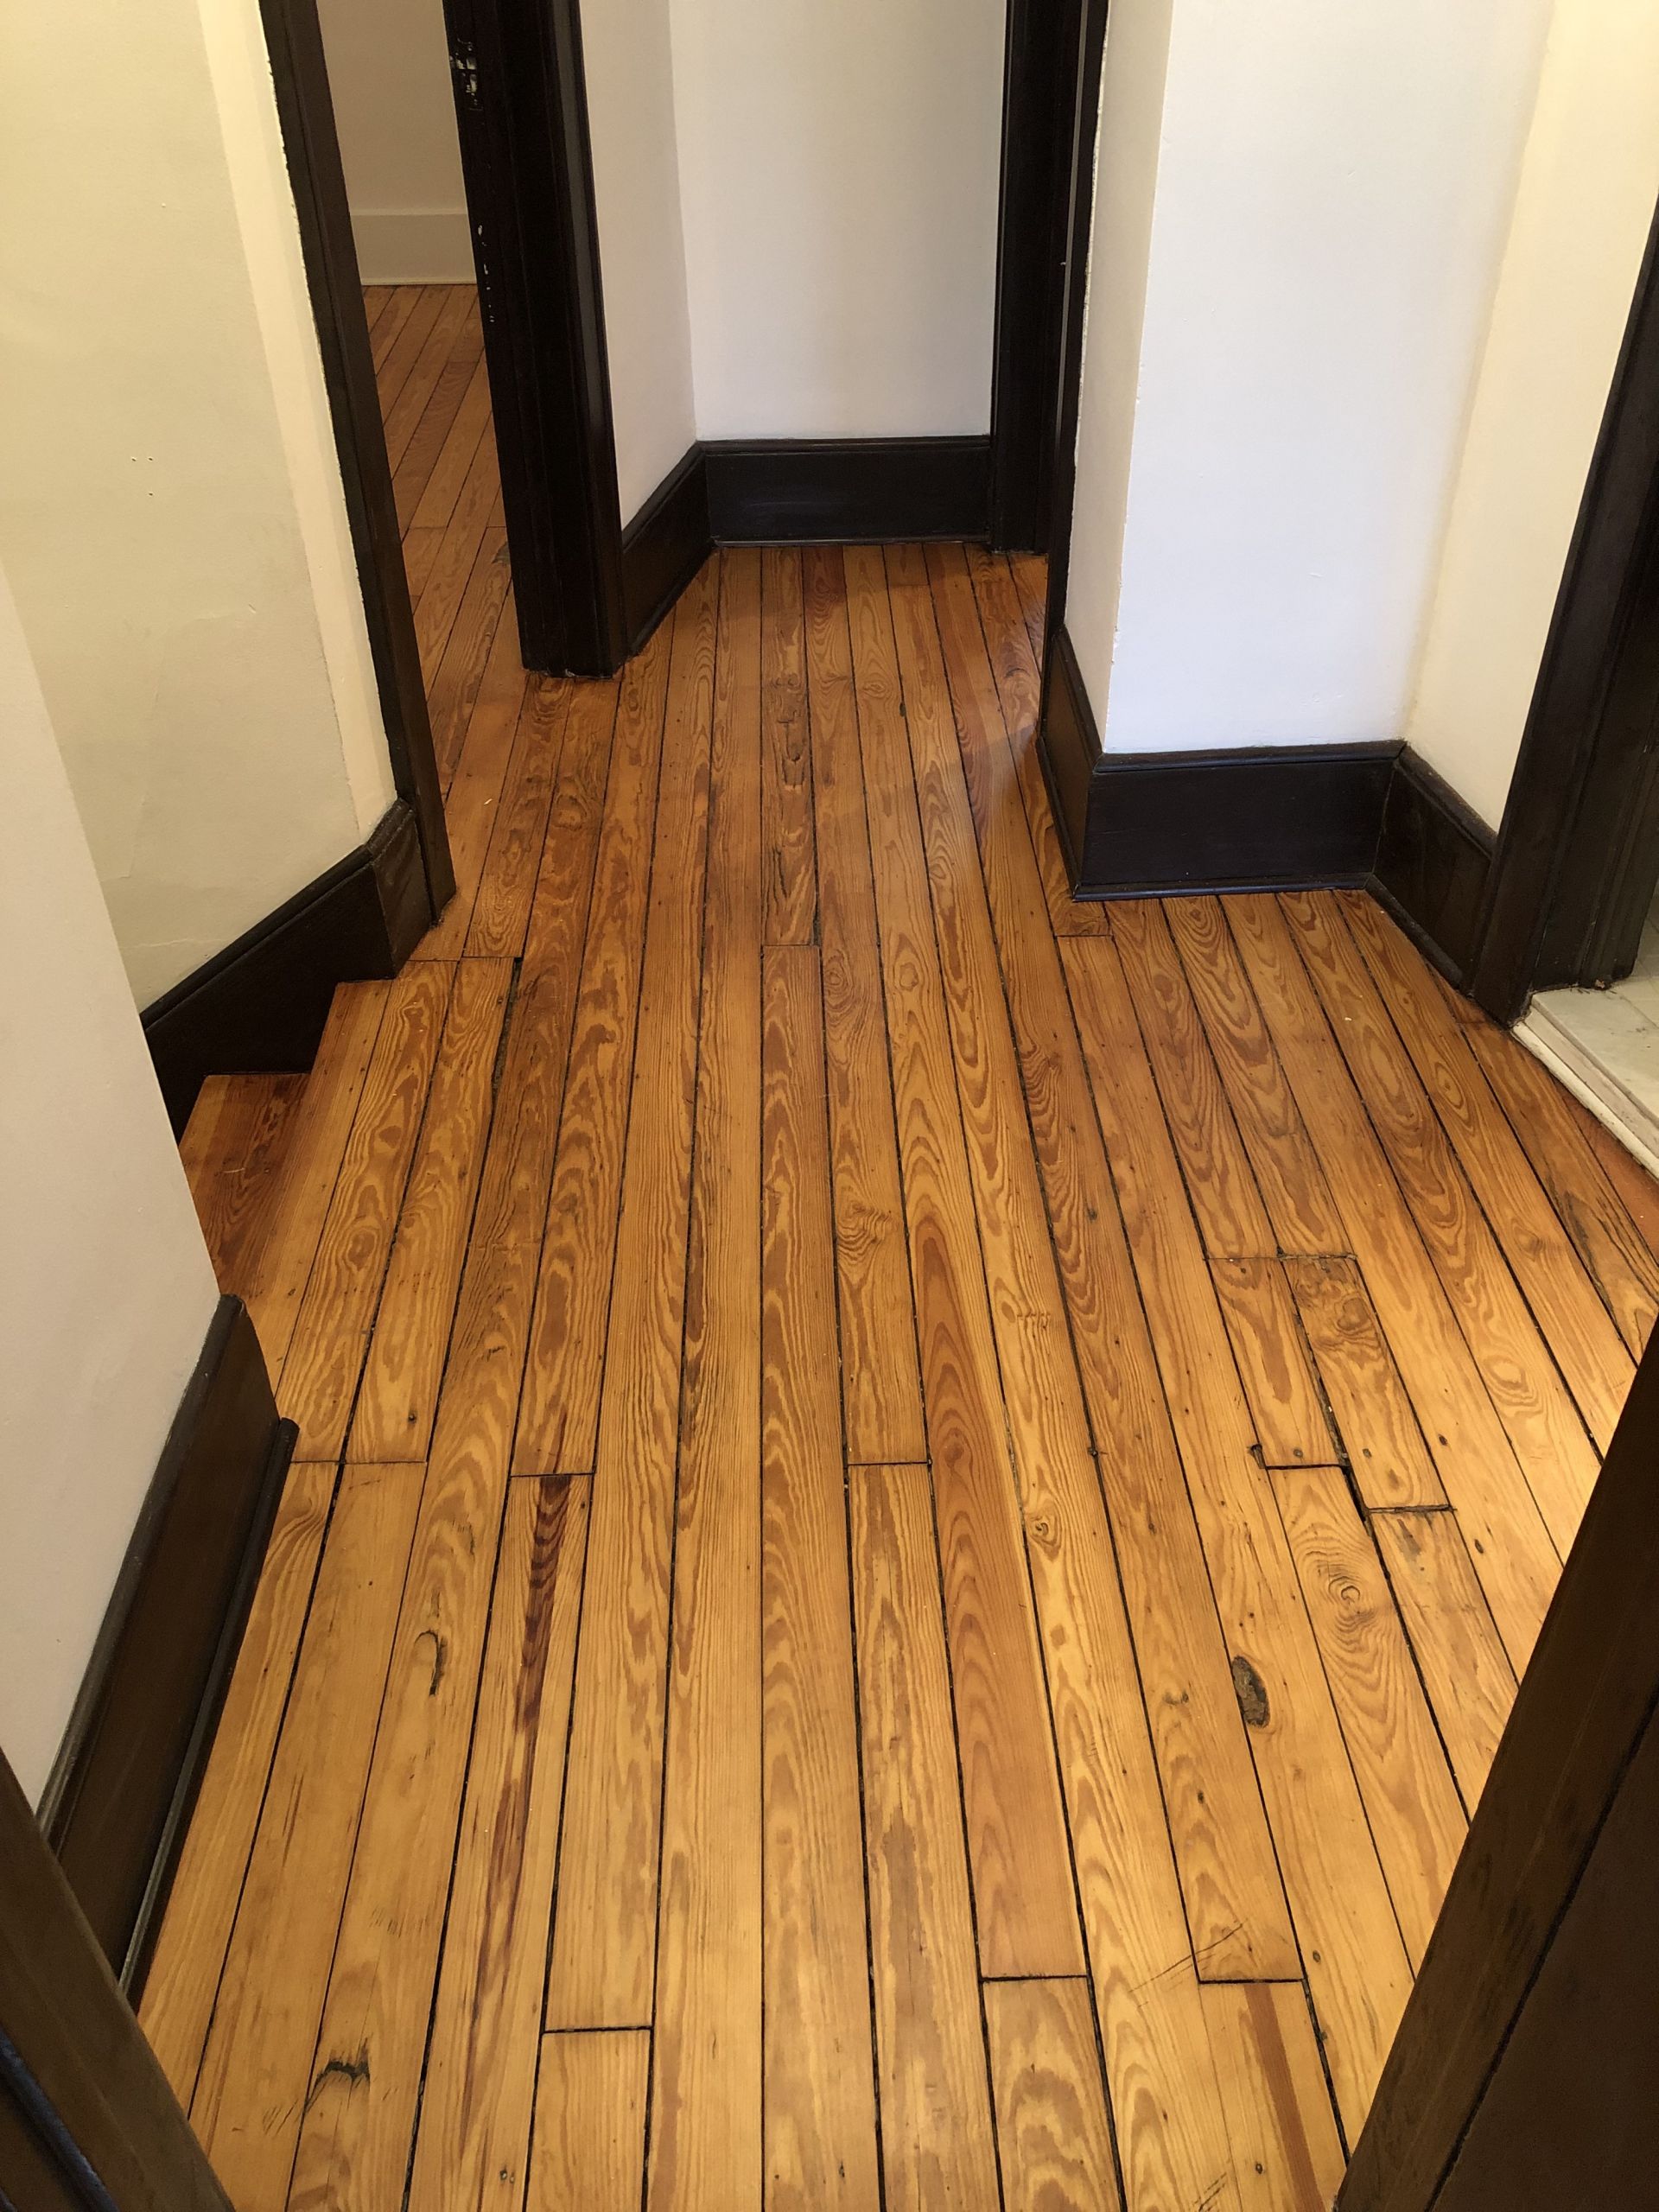 DIY Wood Flooring Refinish
 HOW TO REFINISH HARDWOOD FLOORS Step by Step Do It